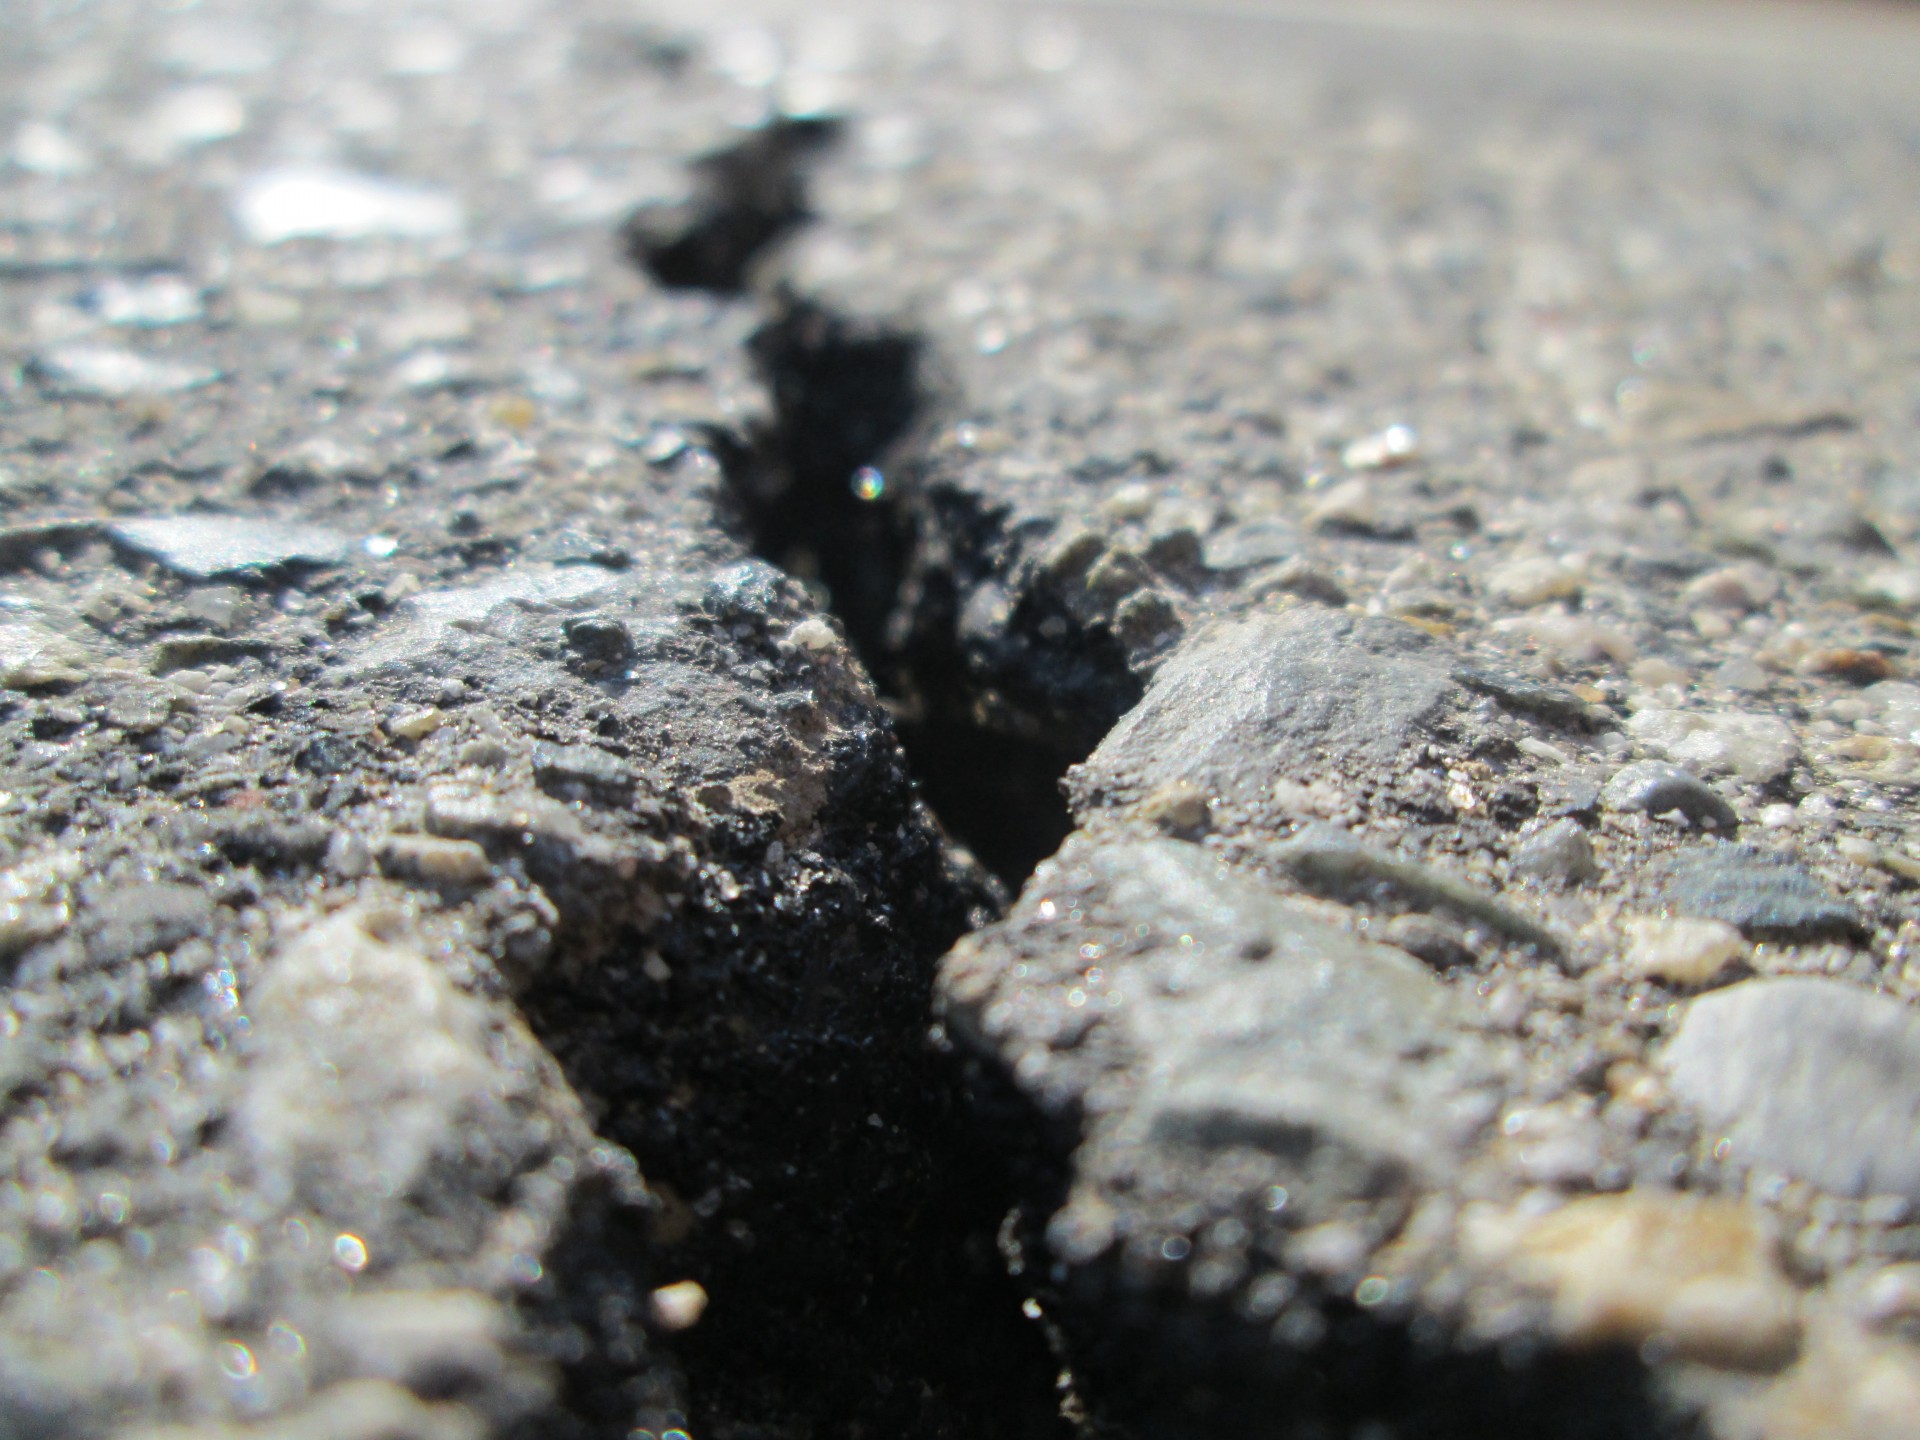 Macro Image of a crack in the Asphalt